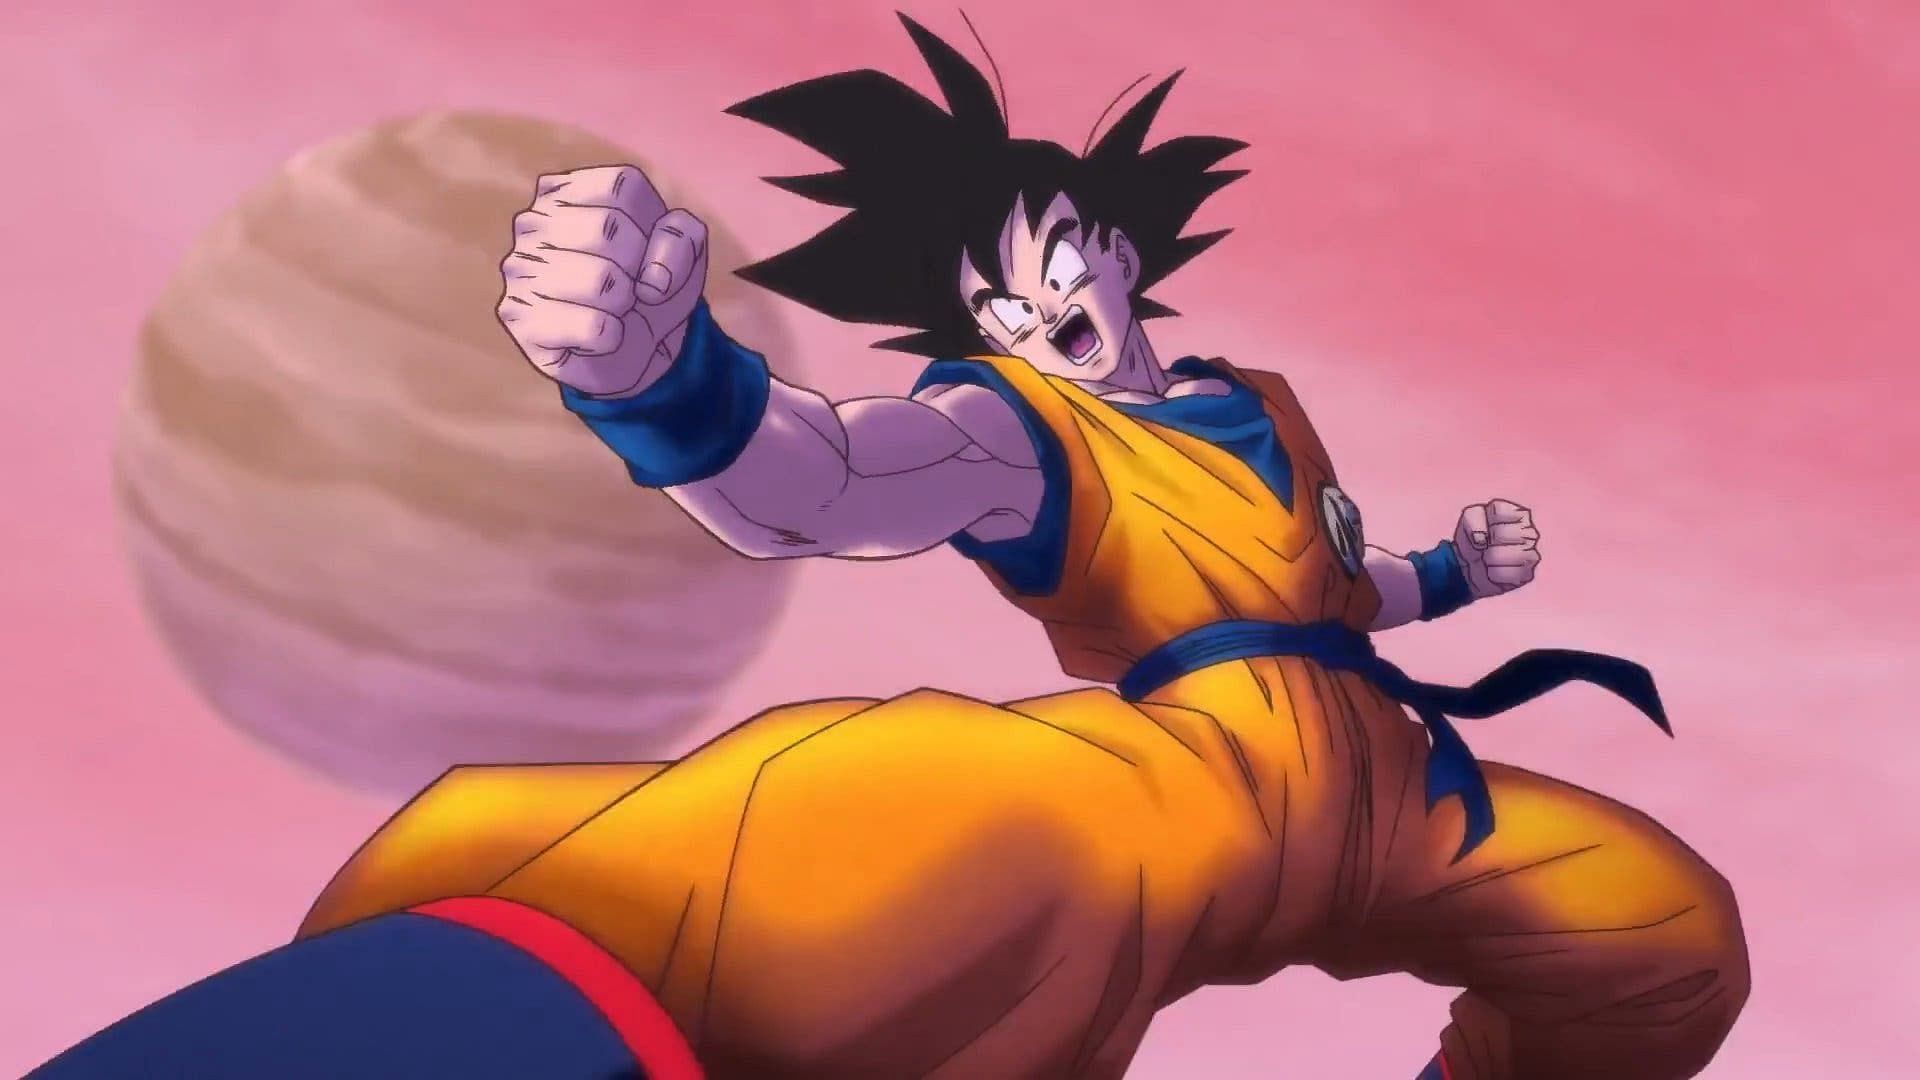 Goku and his friends have many more adventures ahead of them (Image credit: Akira Toriyama/Shueisha, Viz Media, Dragon Ball Super)